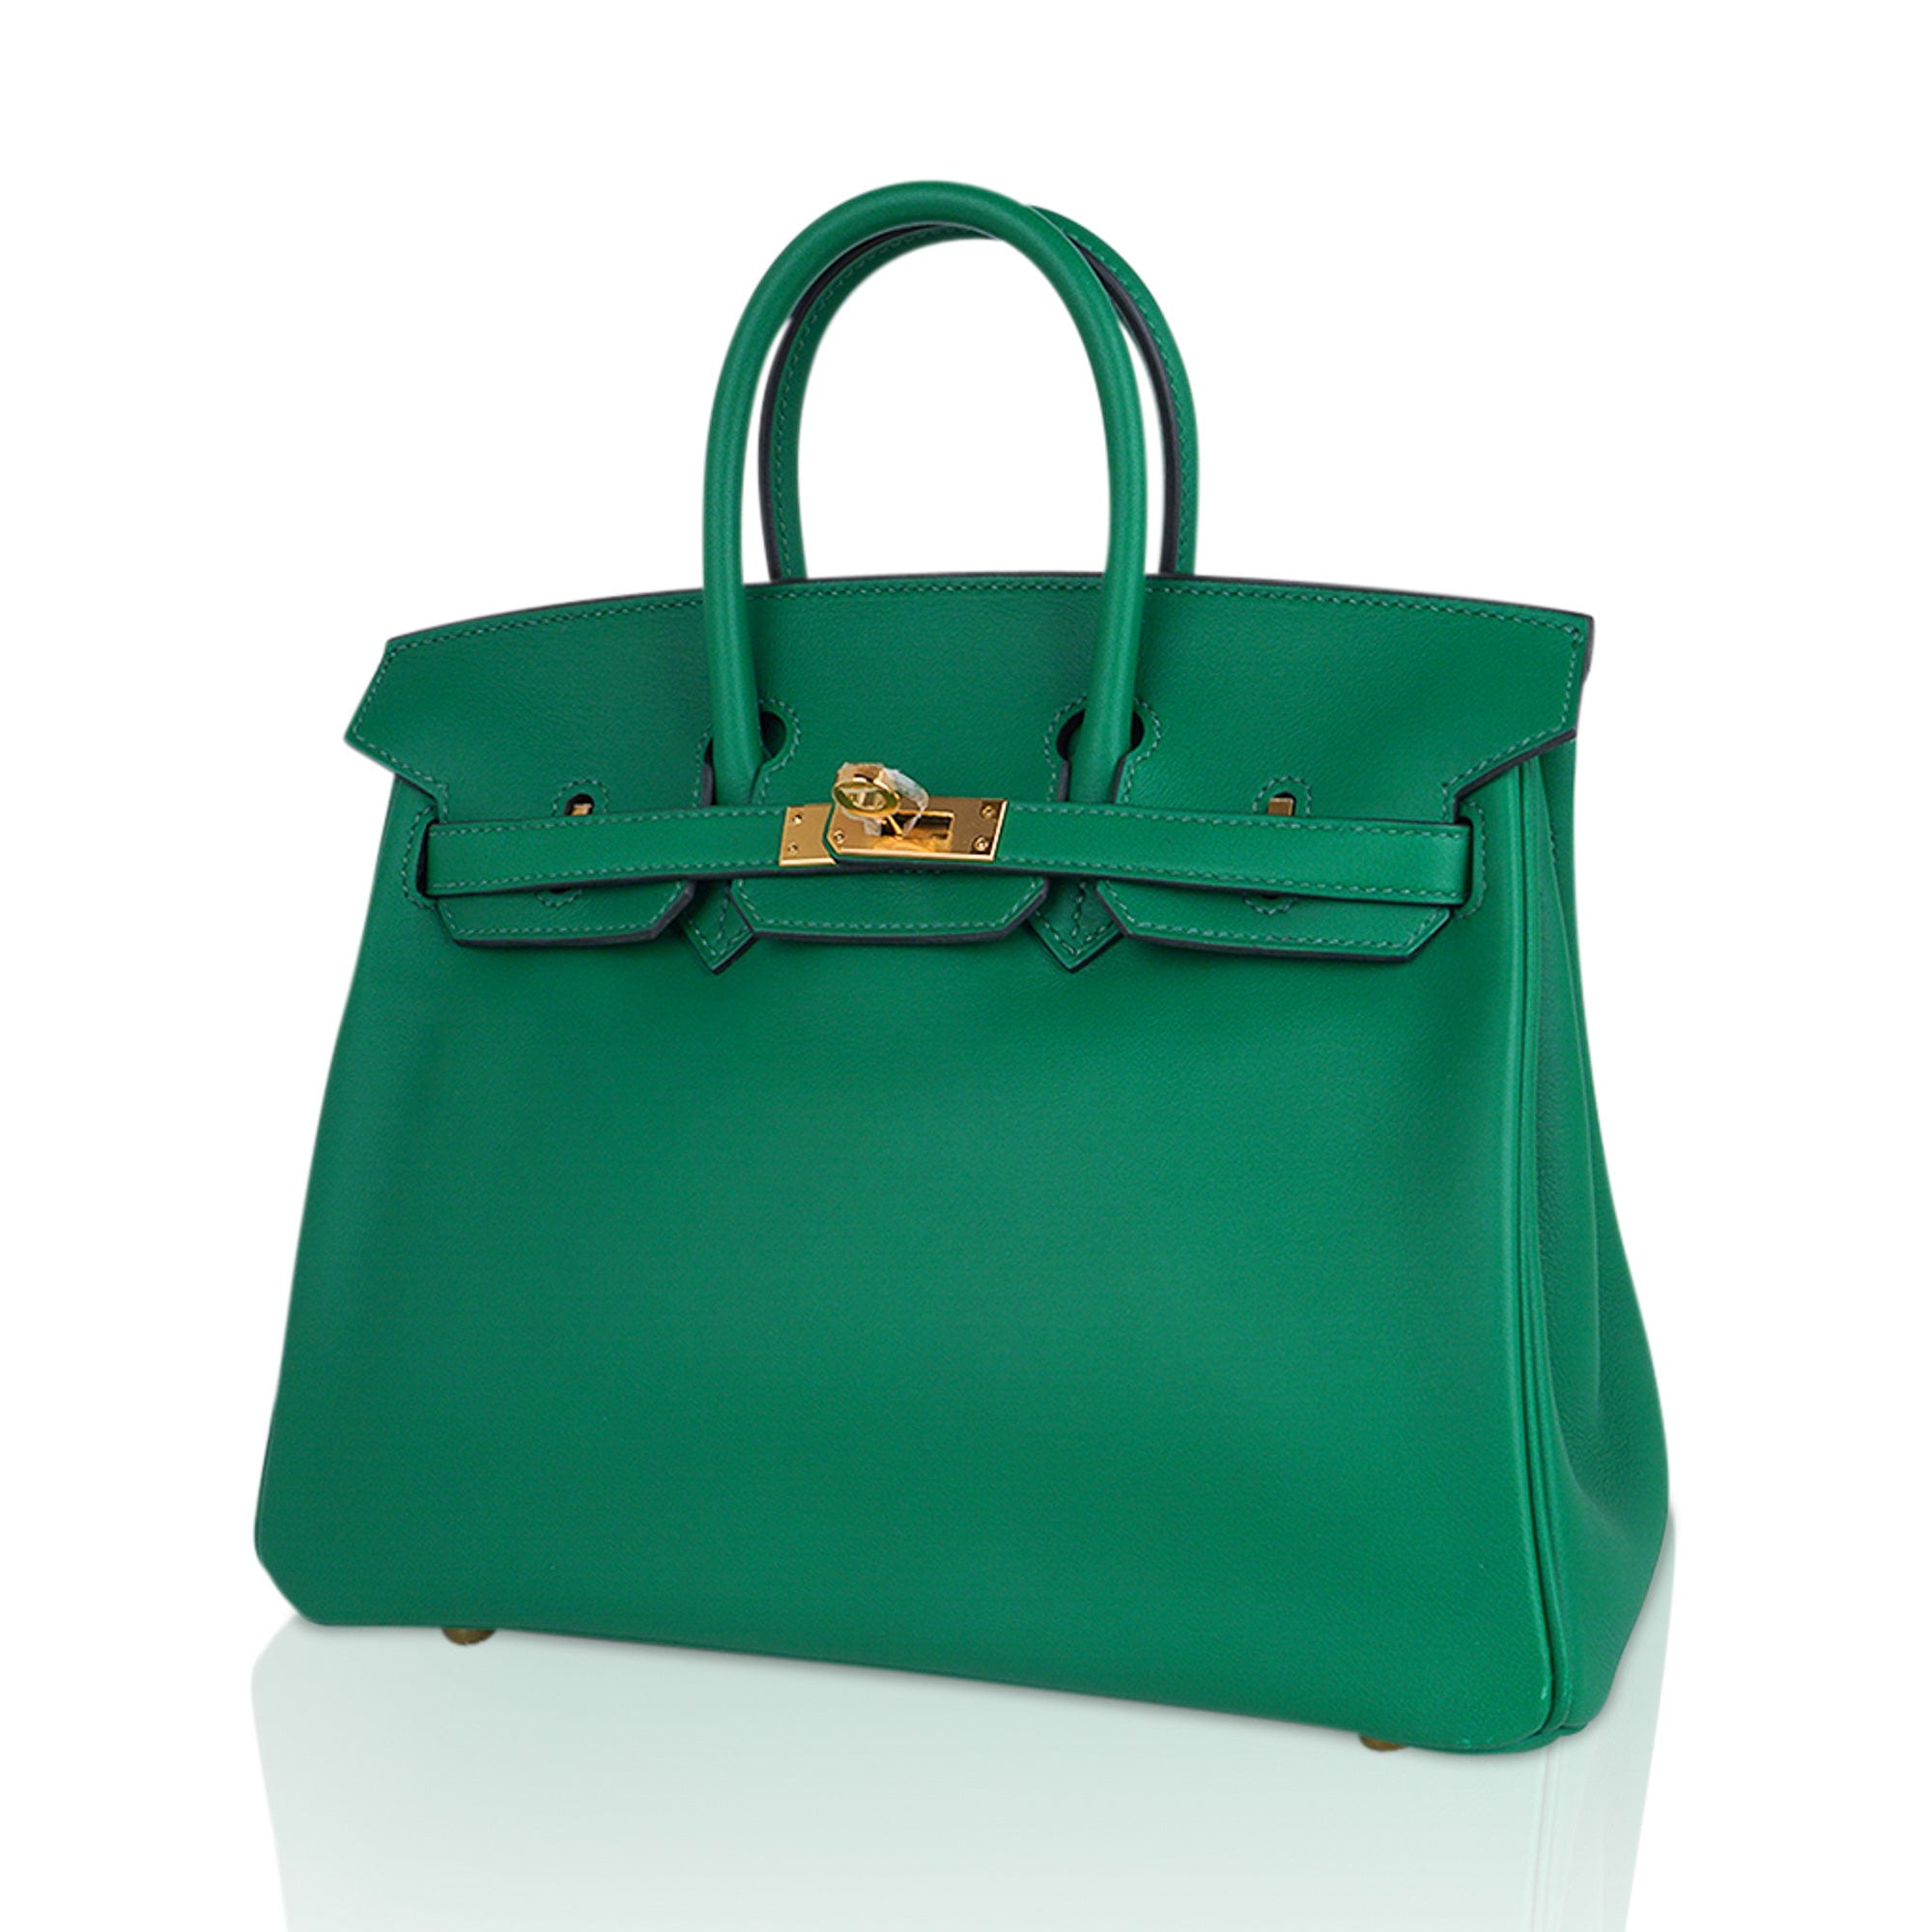 Hermes Birkin Craie Swift Leather Handbag